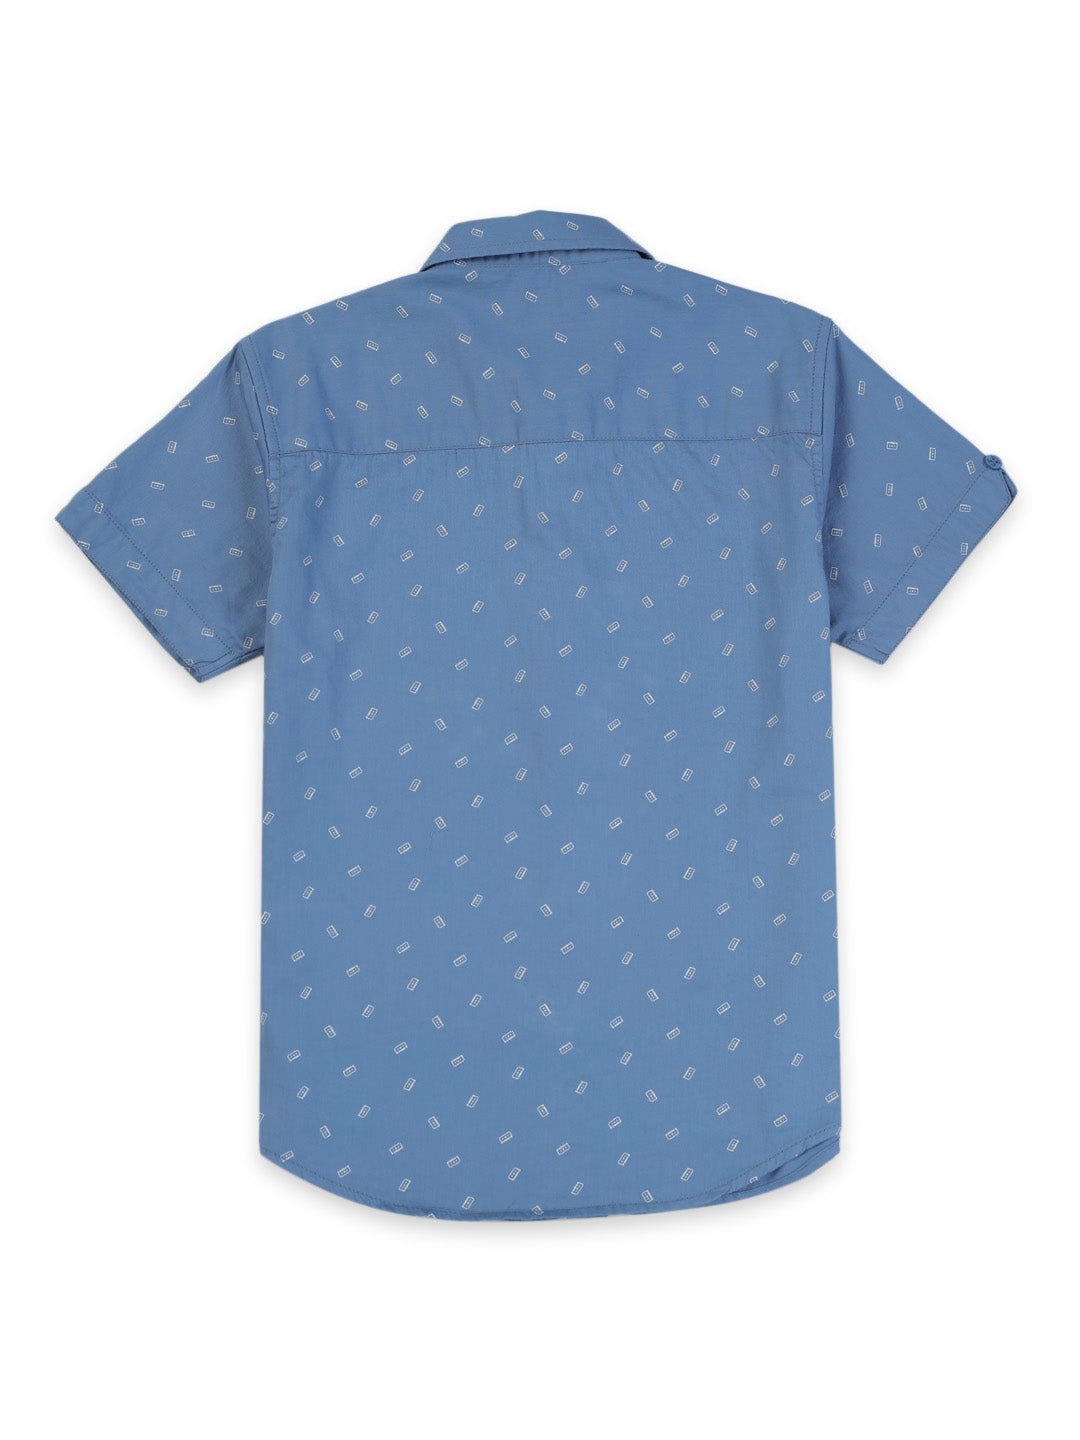 Boys Blue Printed Cotton Shirt